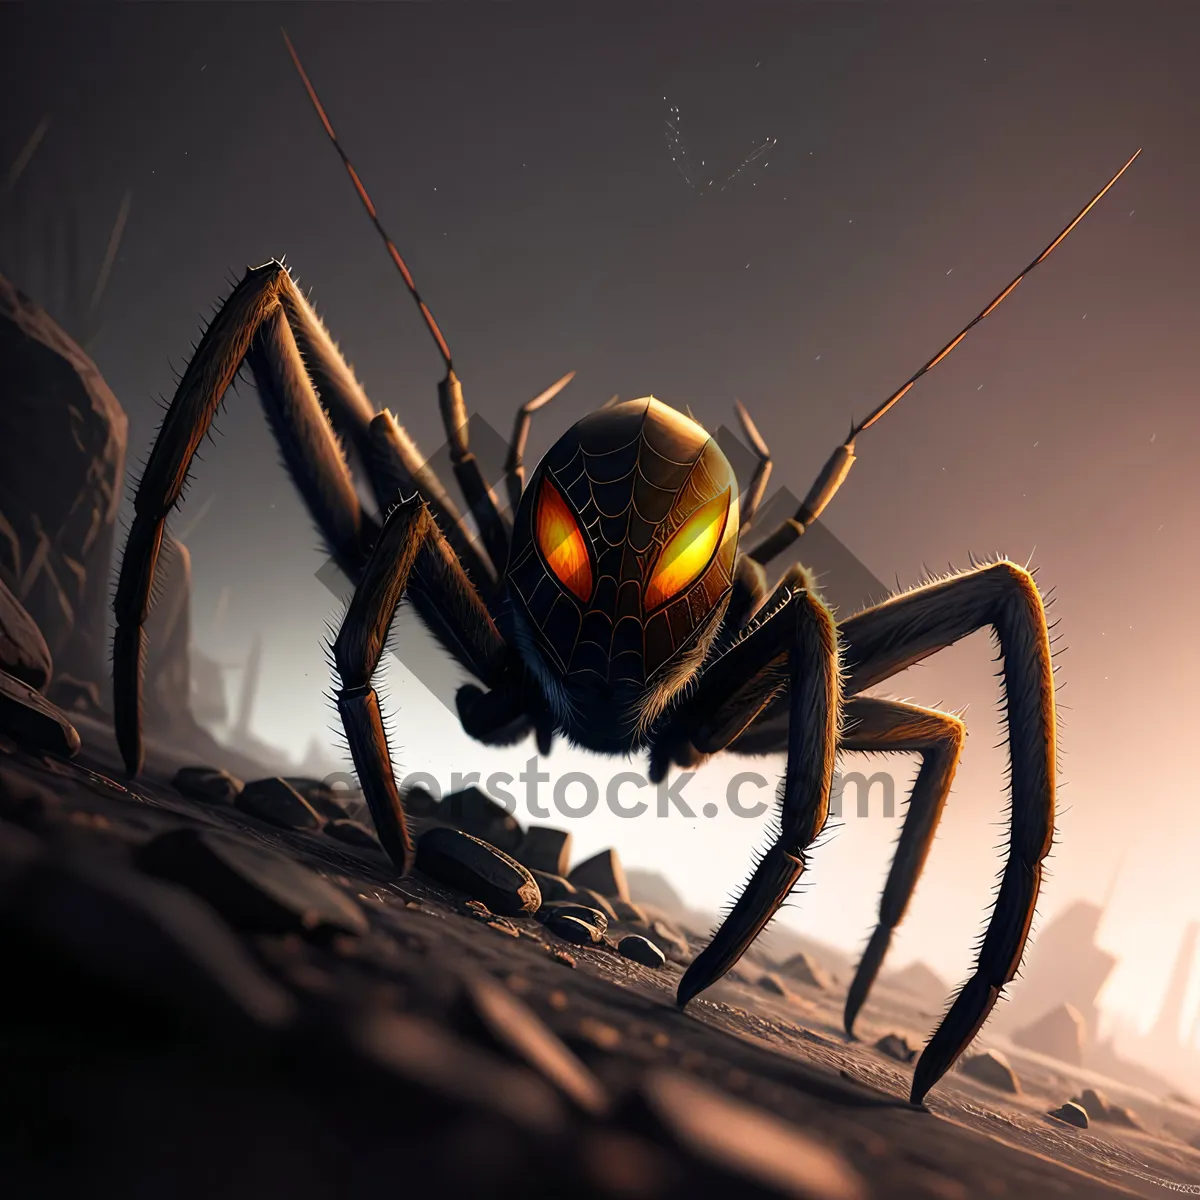 Picture of Black Widow Spider - Close-Up Wildlife Arachnid Image